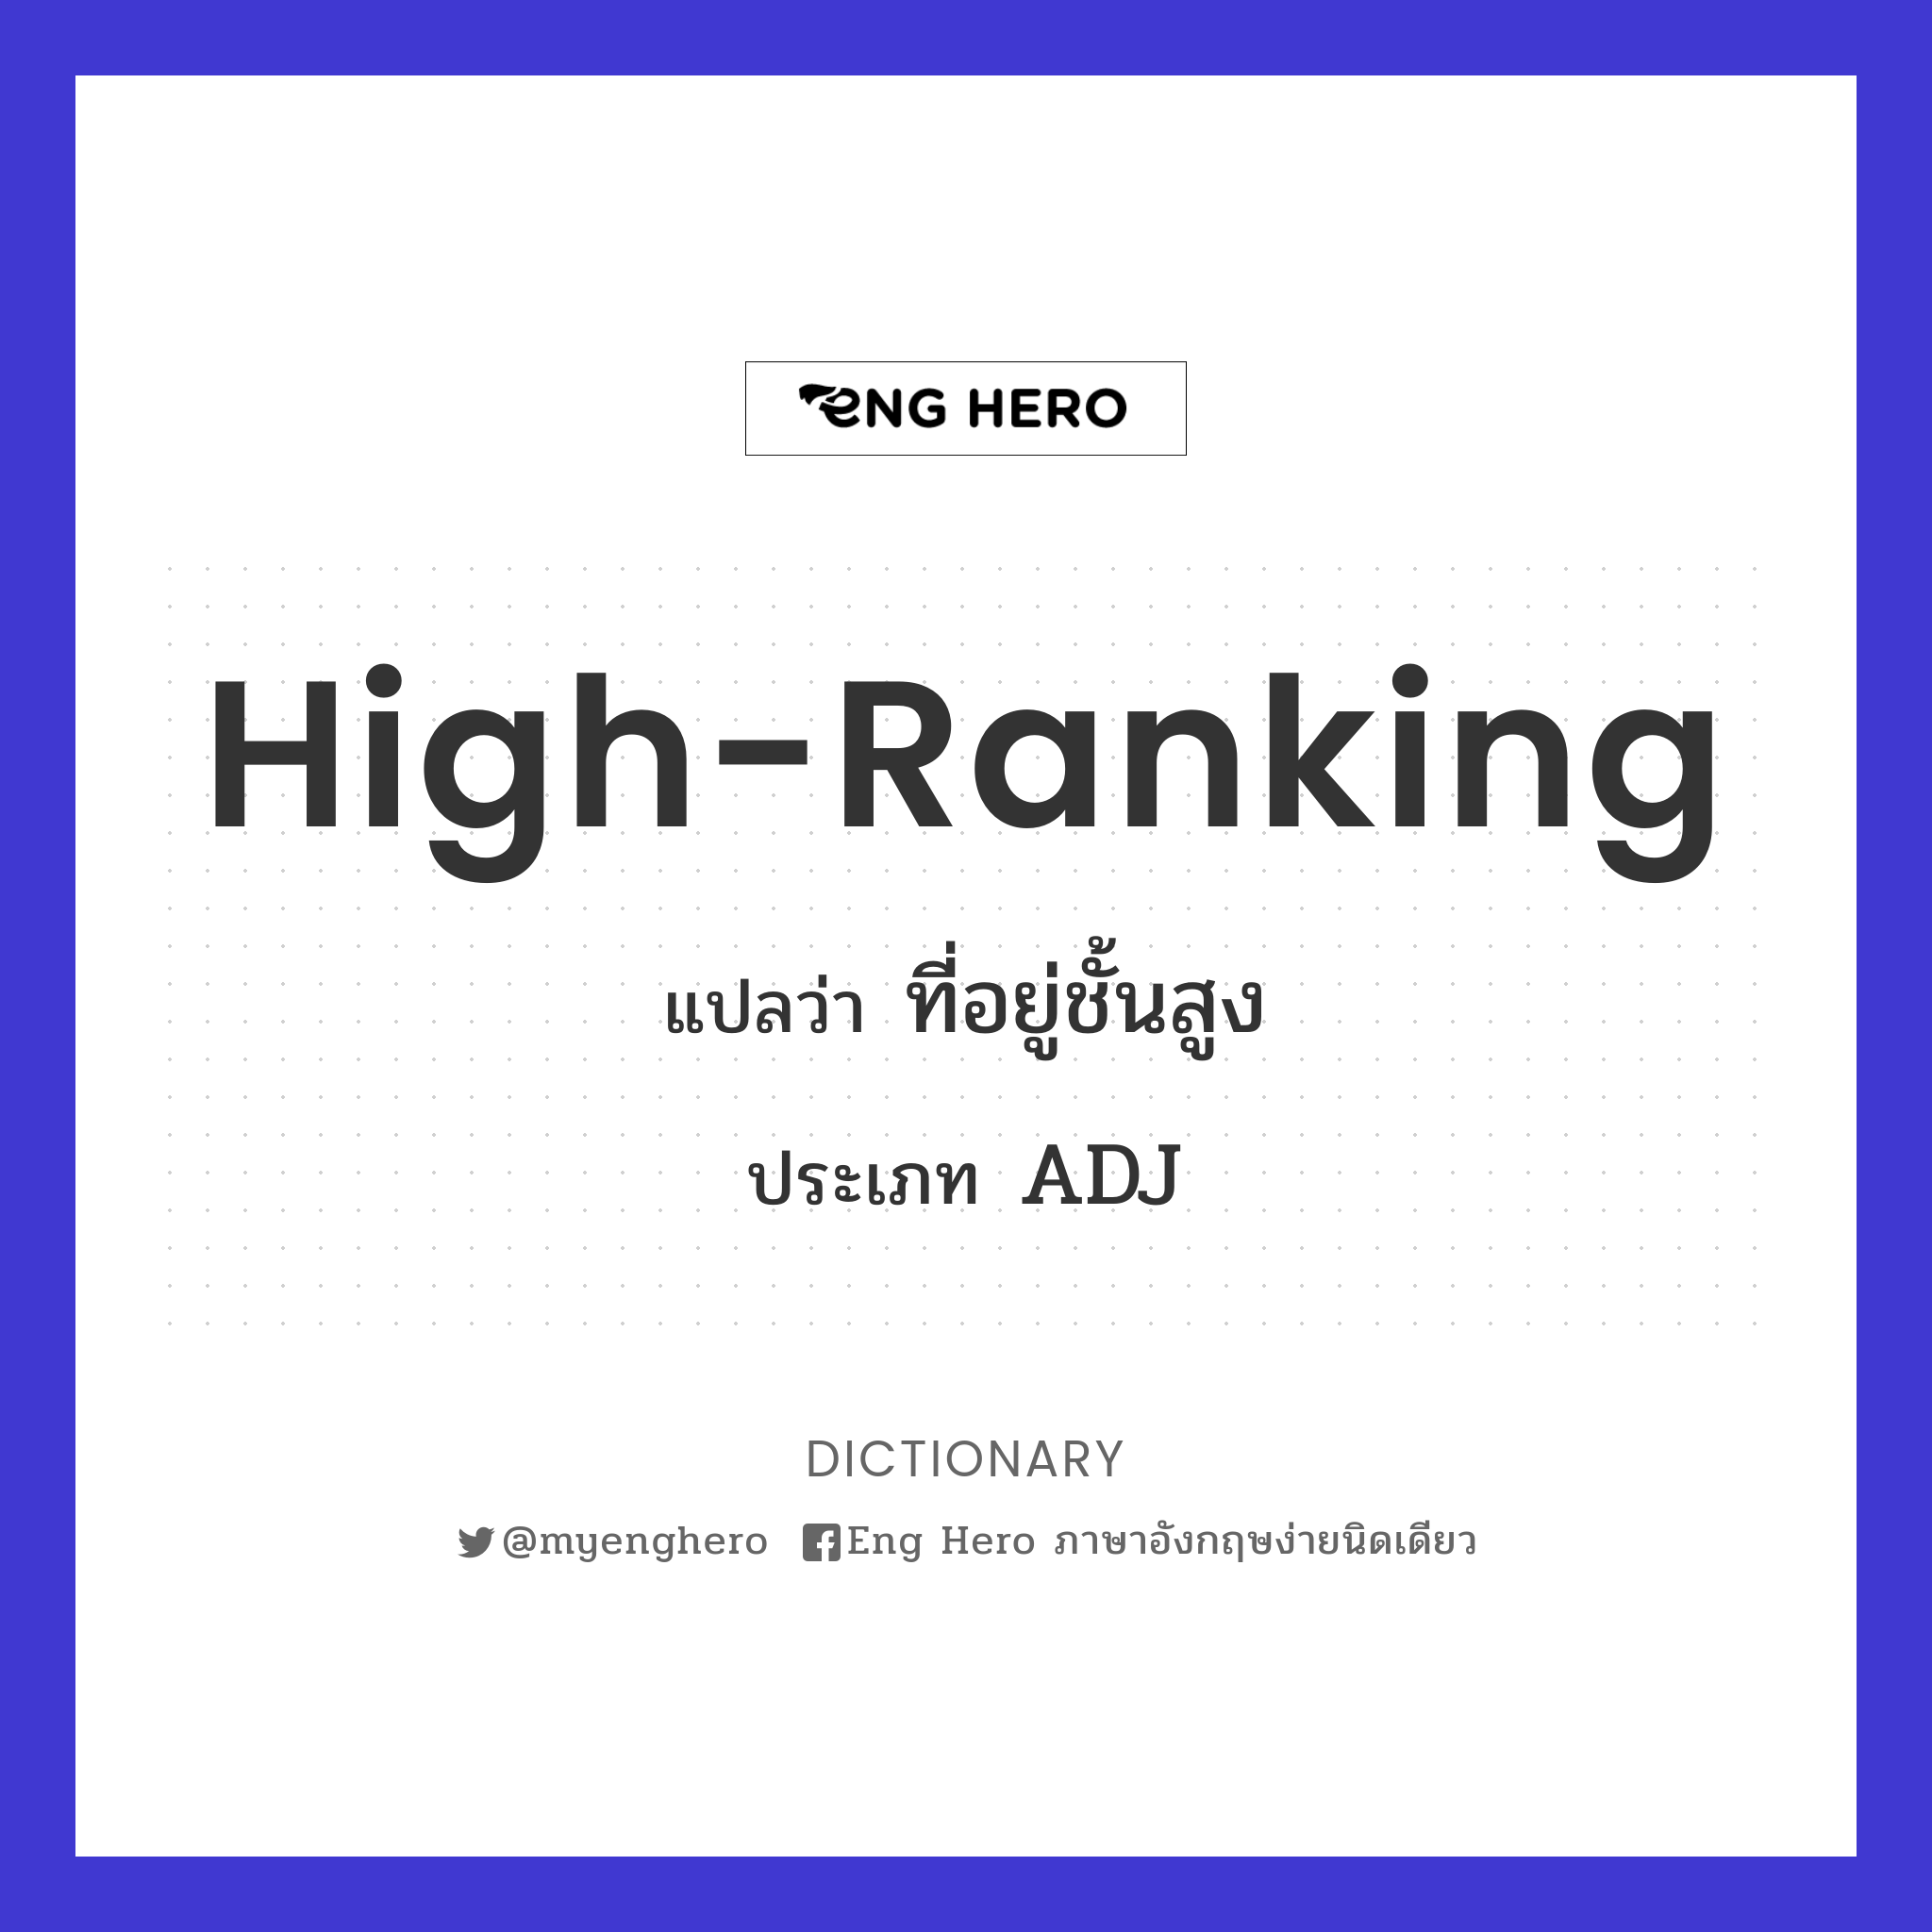 high-ranking